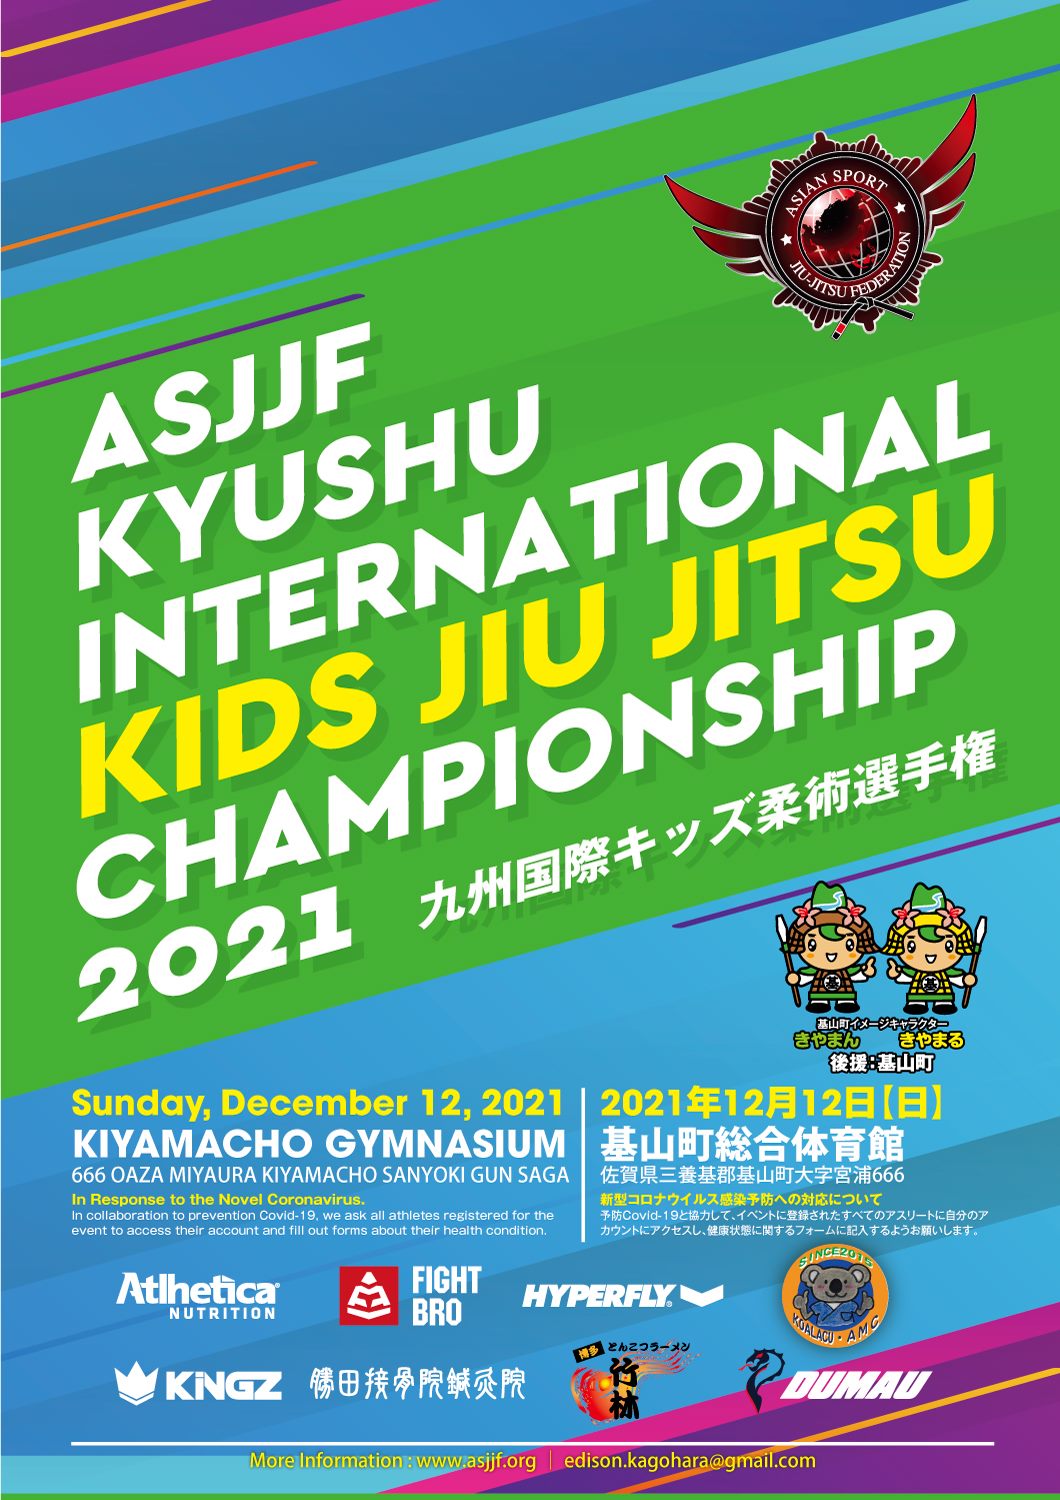 asjjf kyushu international kids jiu jitsu championship 2021